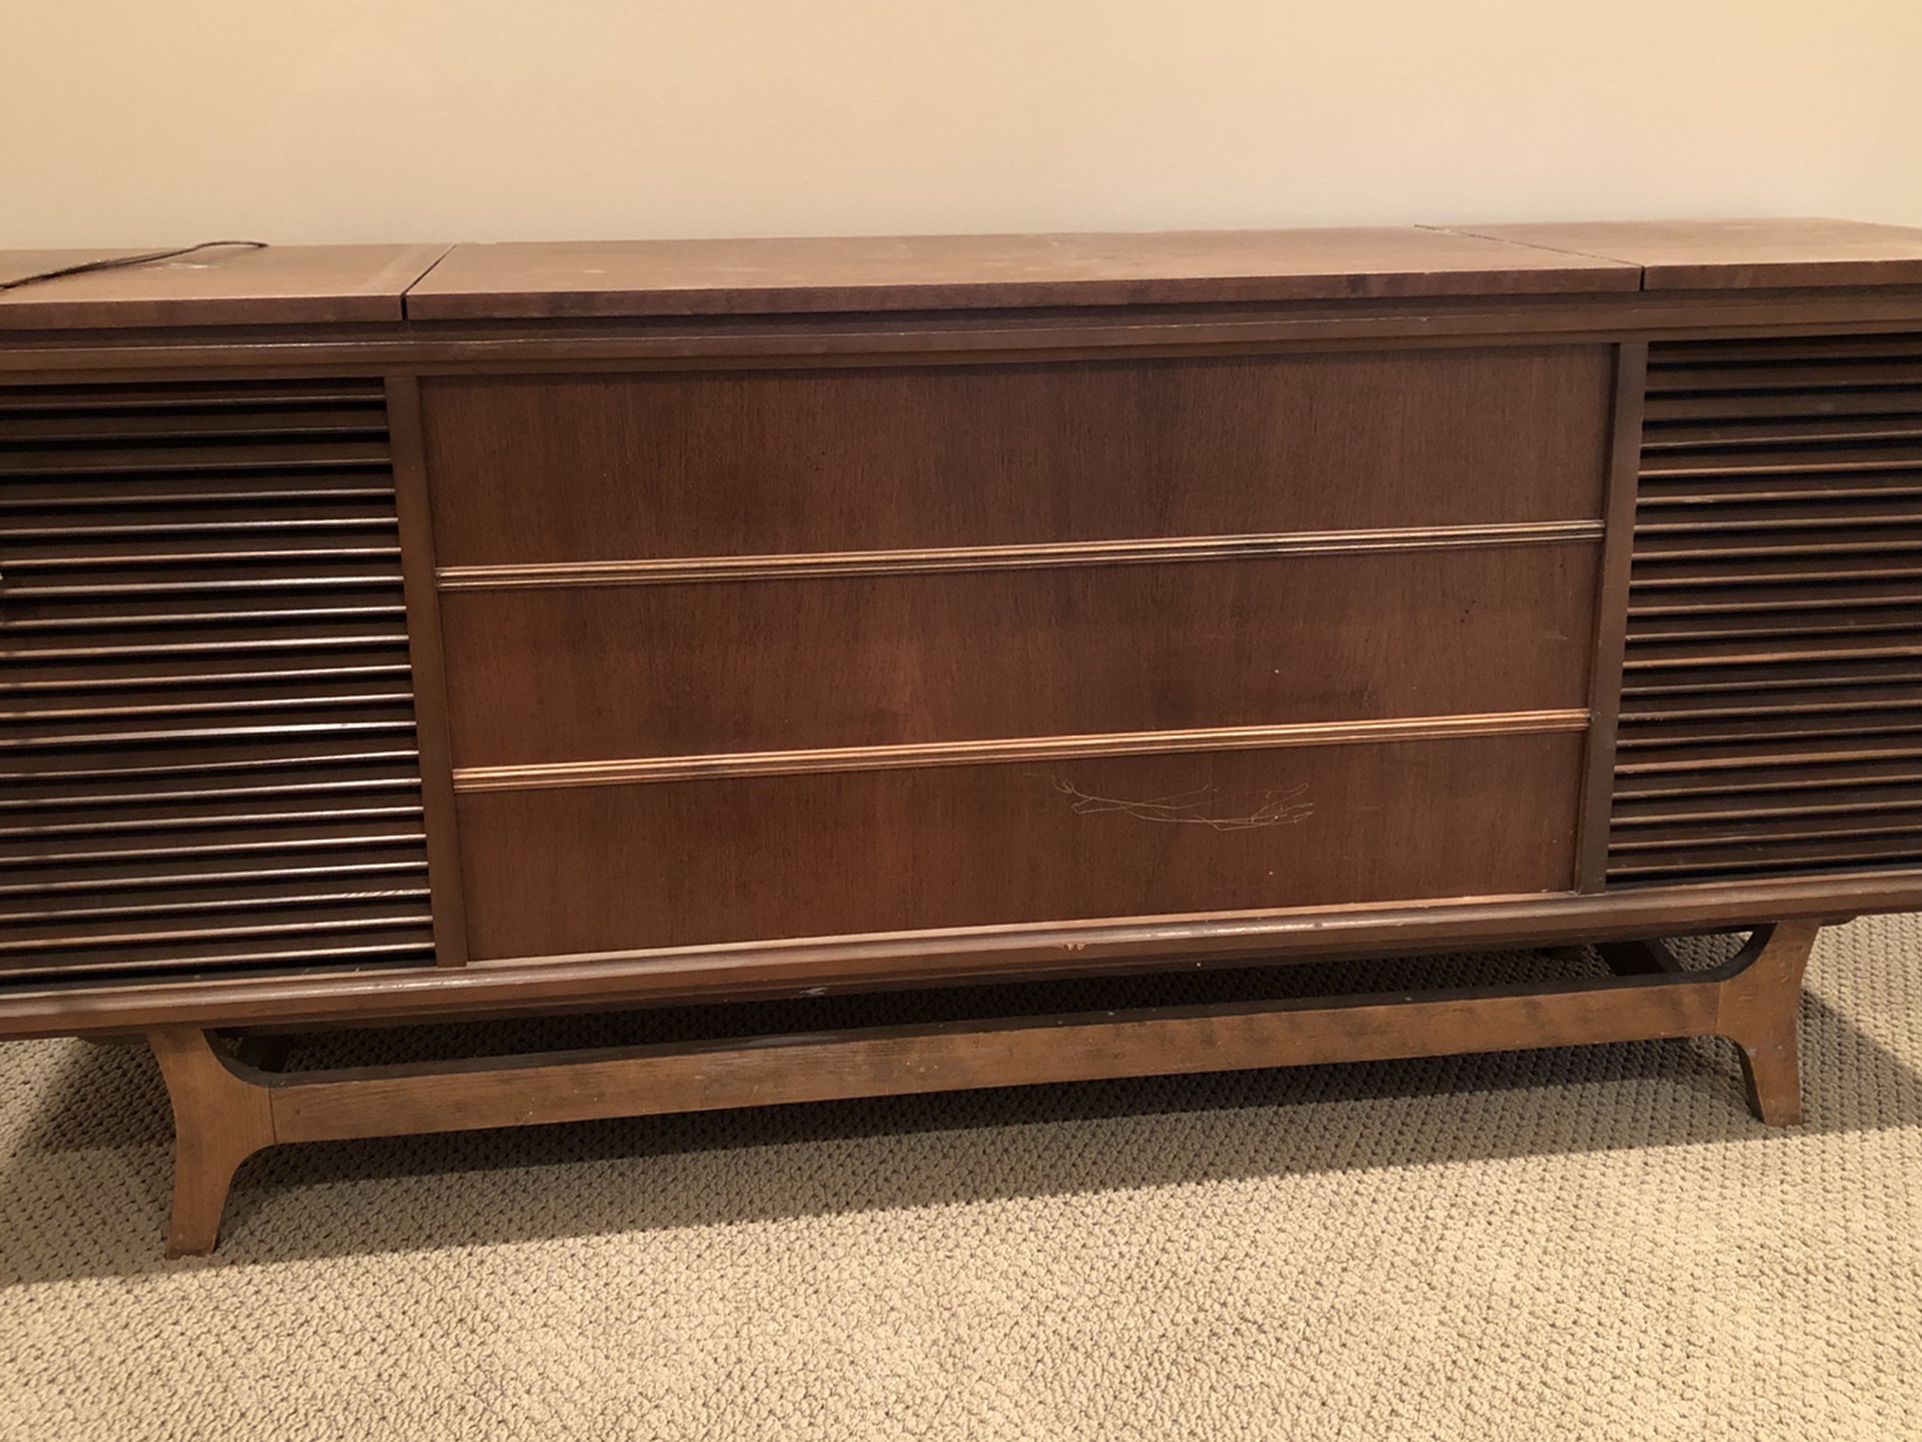 Vintage Stereo Cabinet